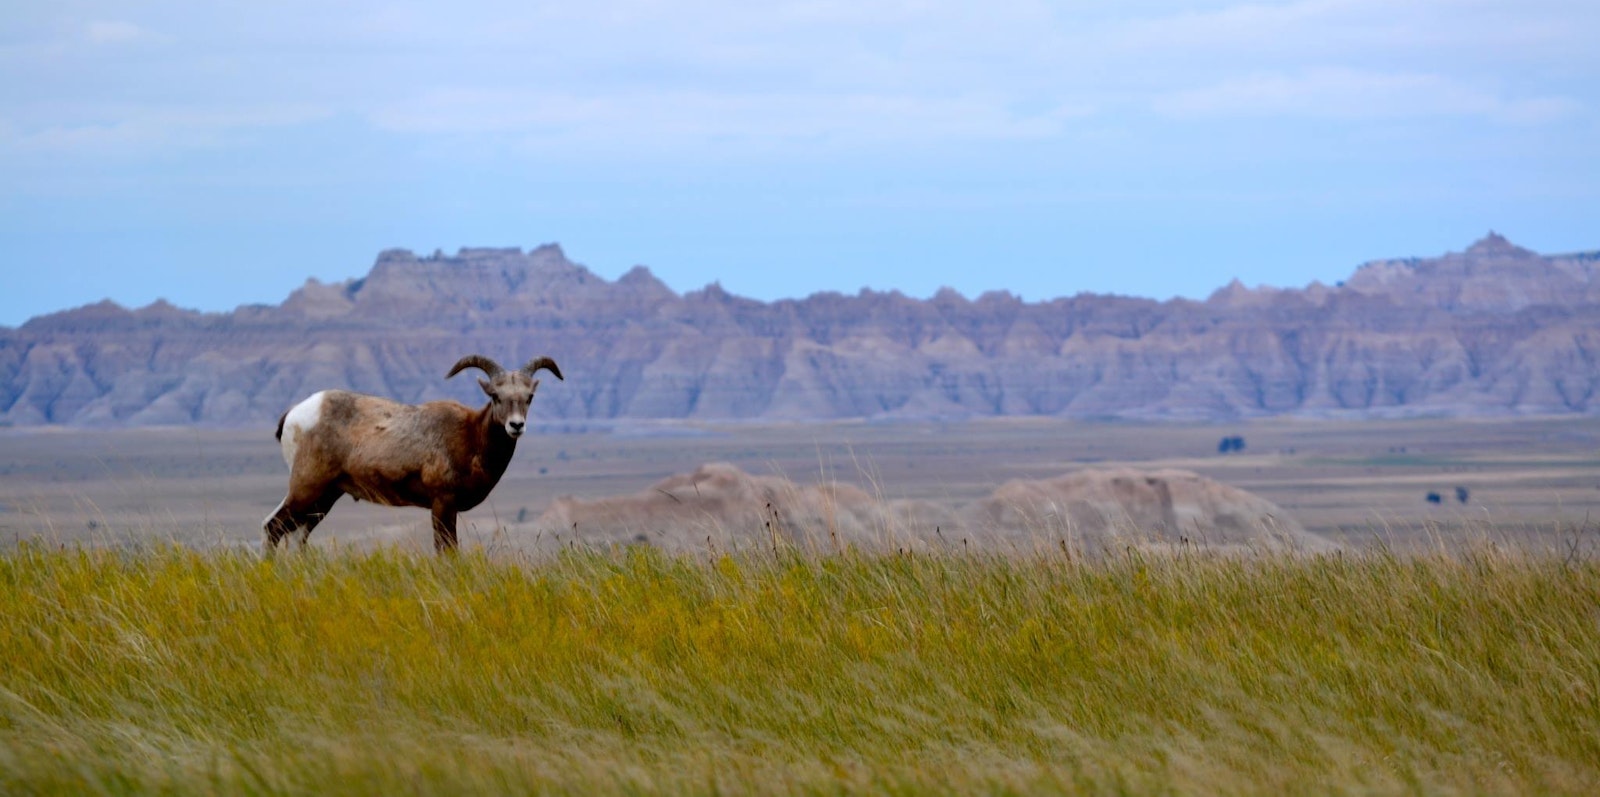 Desert bighorn sheep in a warm plain landscape